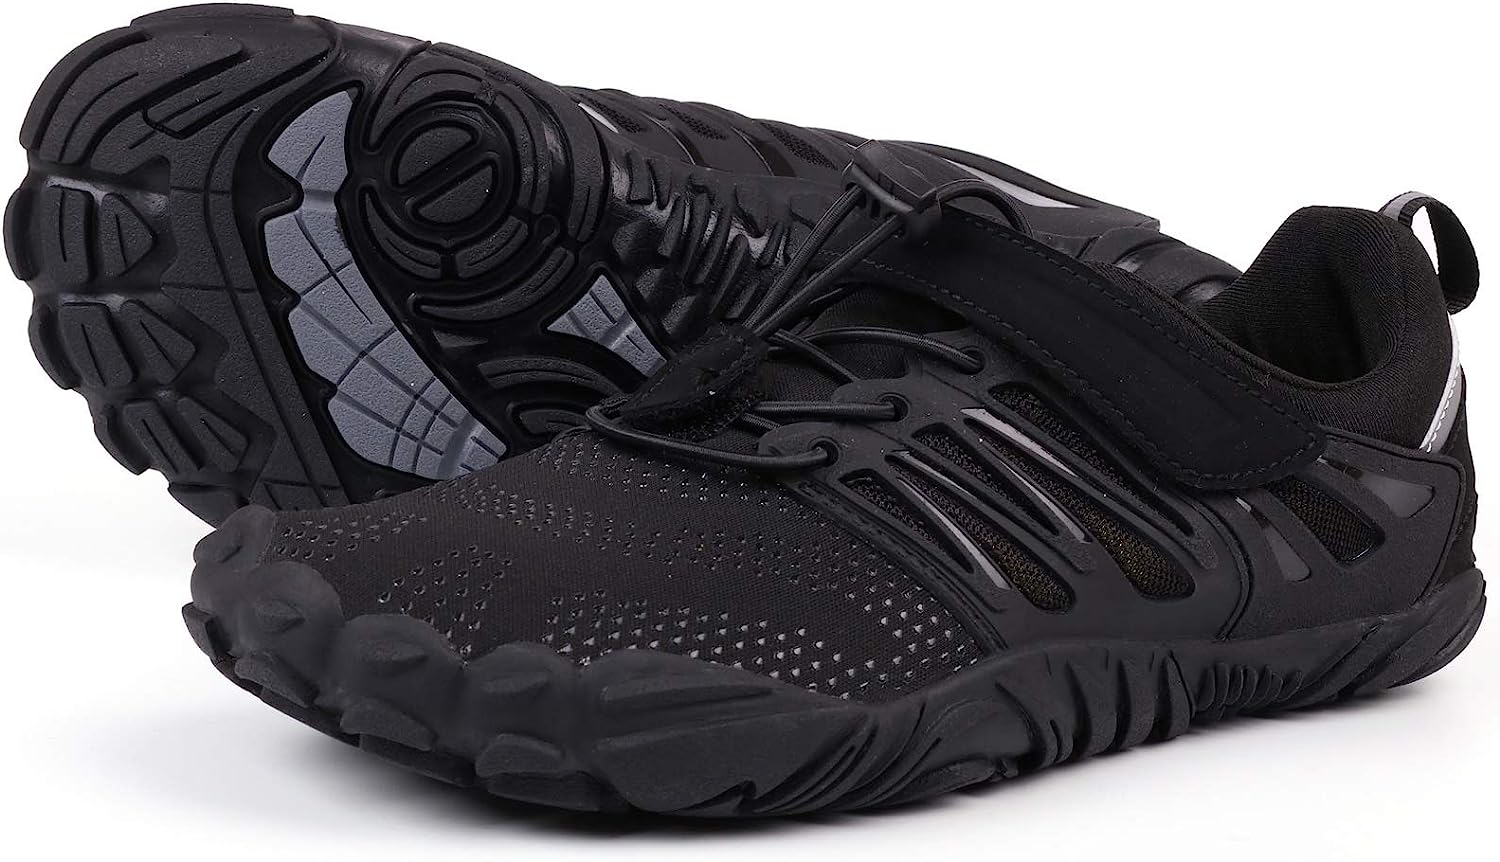 Joomra Women's Minimalist Trail Running Barefoot Shoes [...]